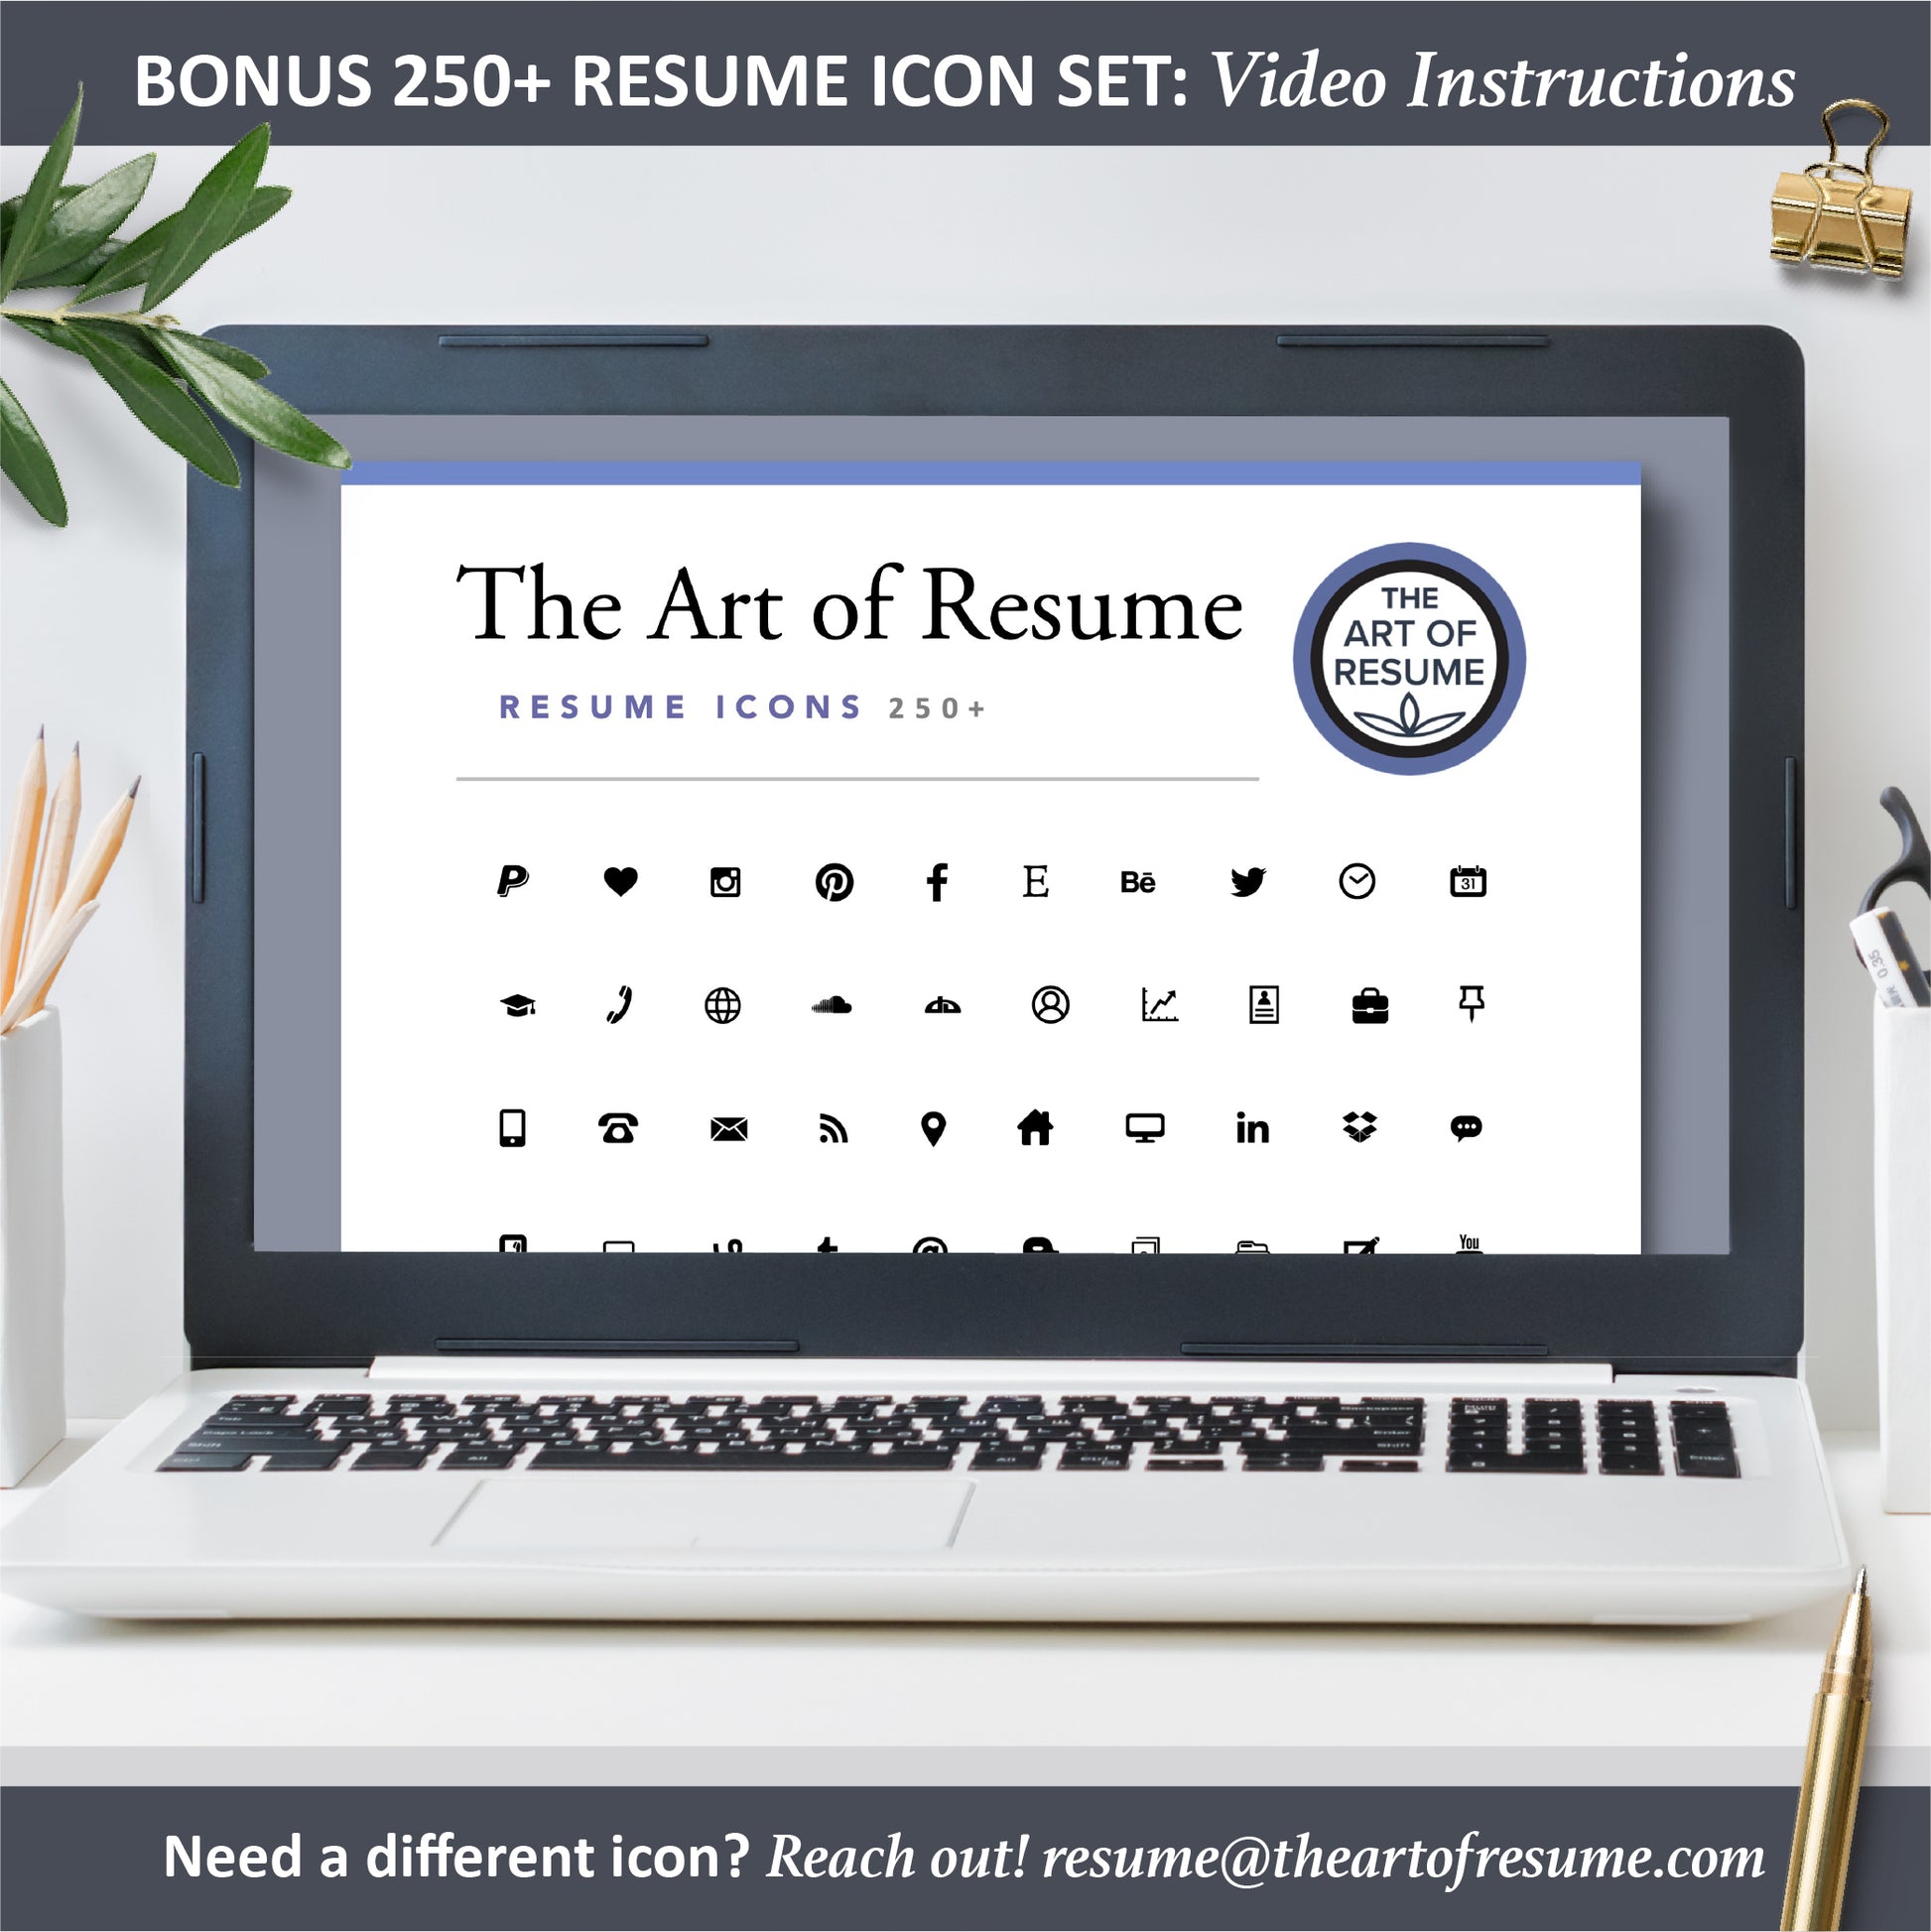 The Art of Resume Professional Navy Blue Teacher Resume Template Bundle | Bonus Free Resume Icons